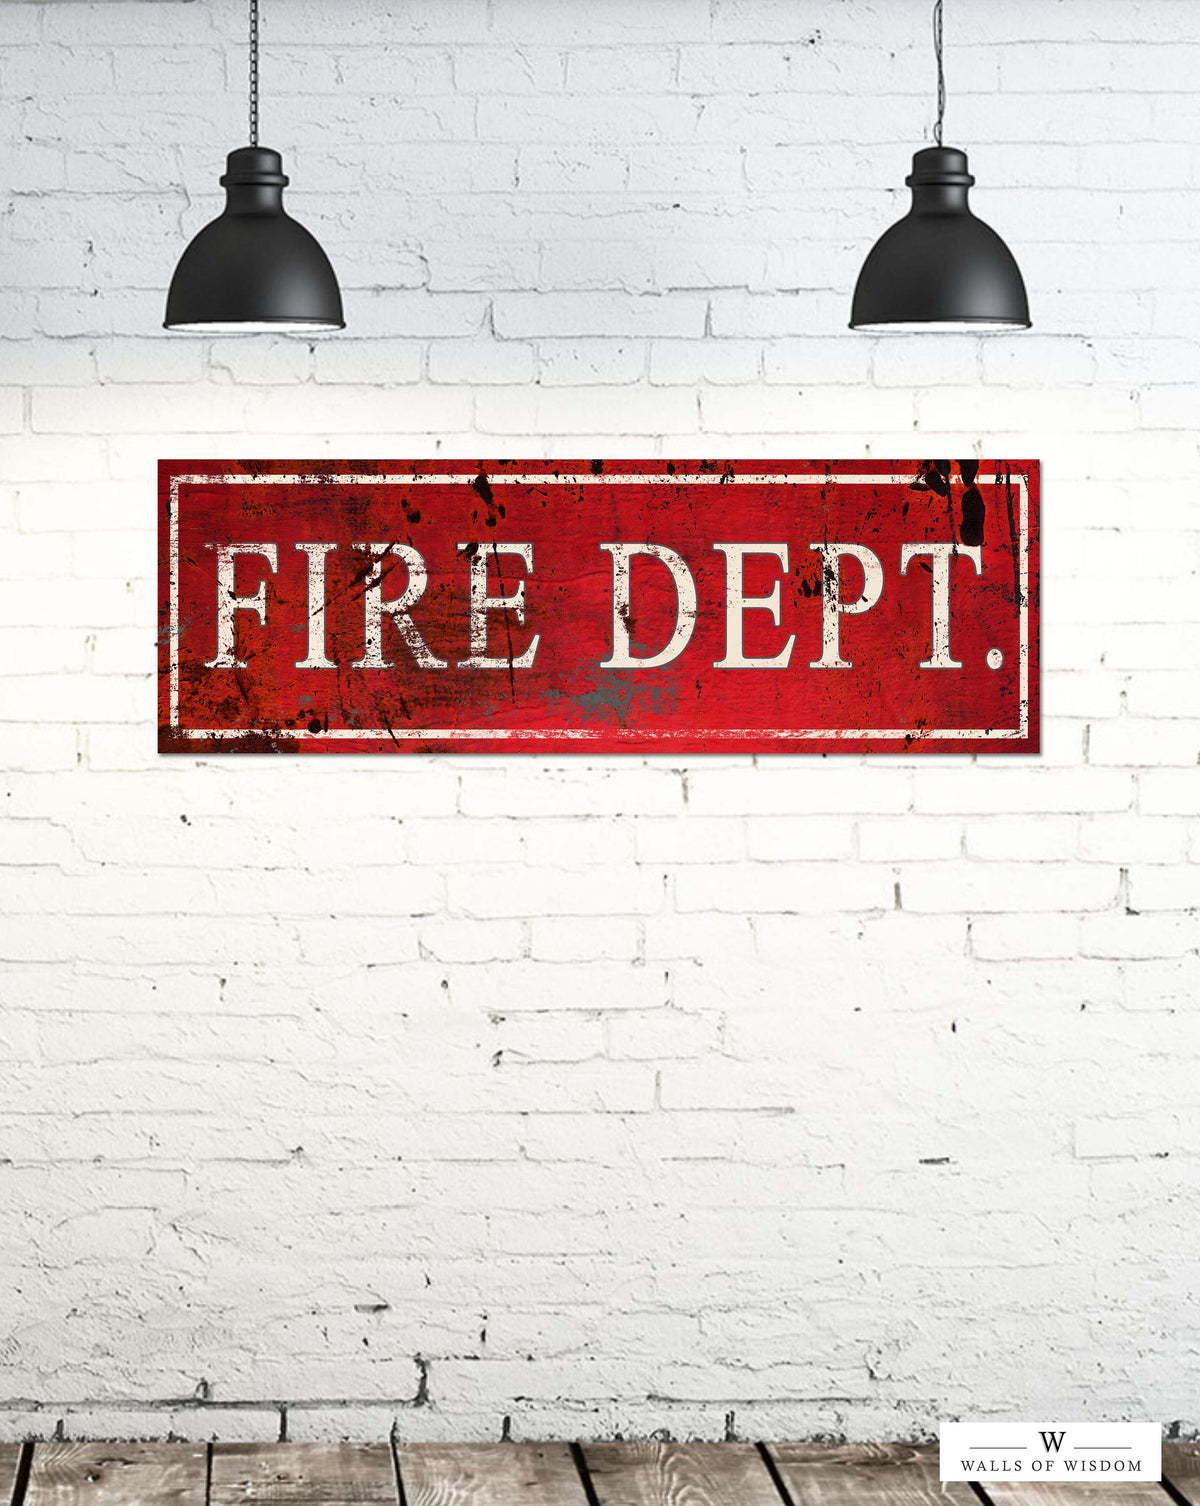 Red Fire Dept. Vintage Fireman Canvas Wall Art  - Firefighter Station Sign Home Wall Decor